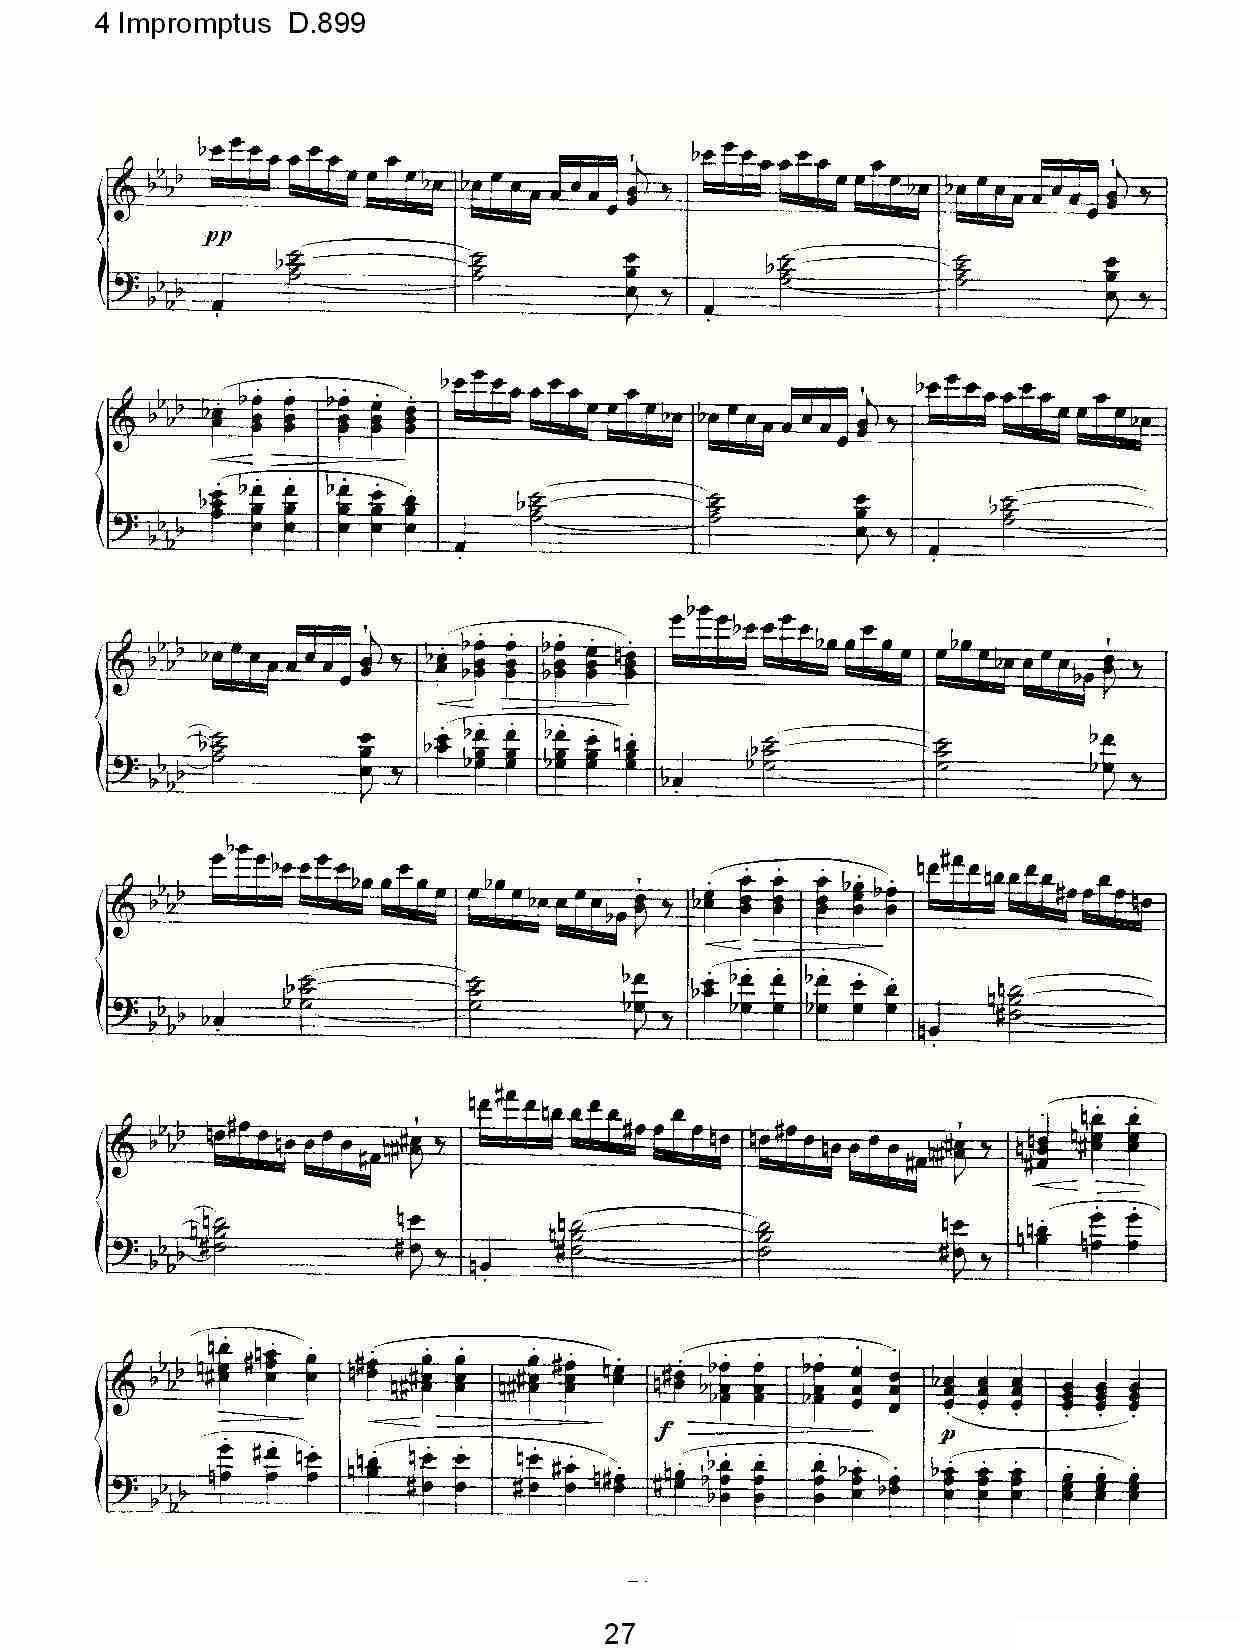 4 Impromptus D.899（4人即兴演奏 D.899）钢琴曲谱（图27）